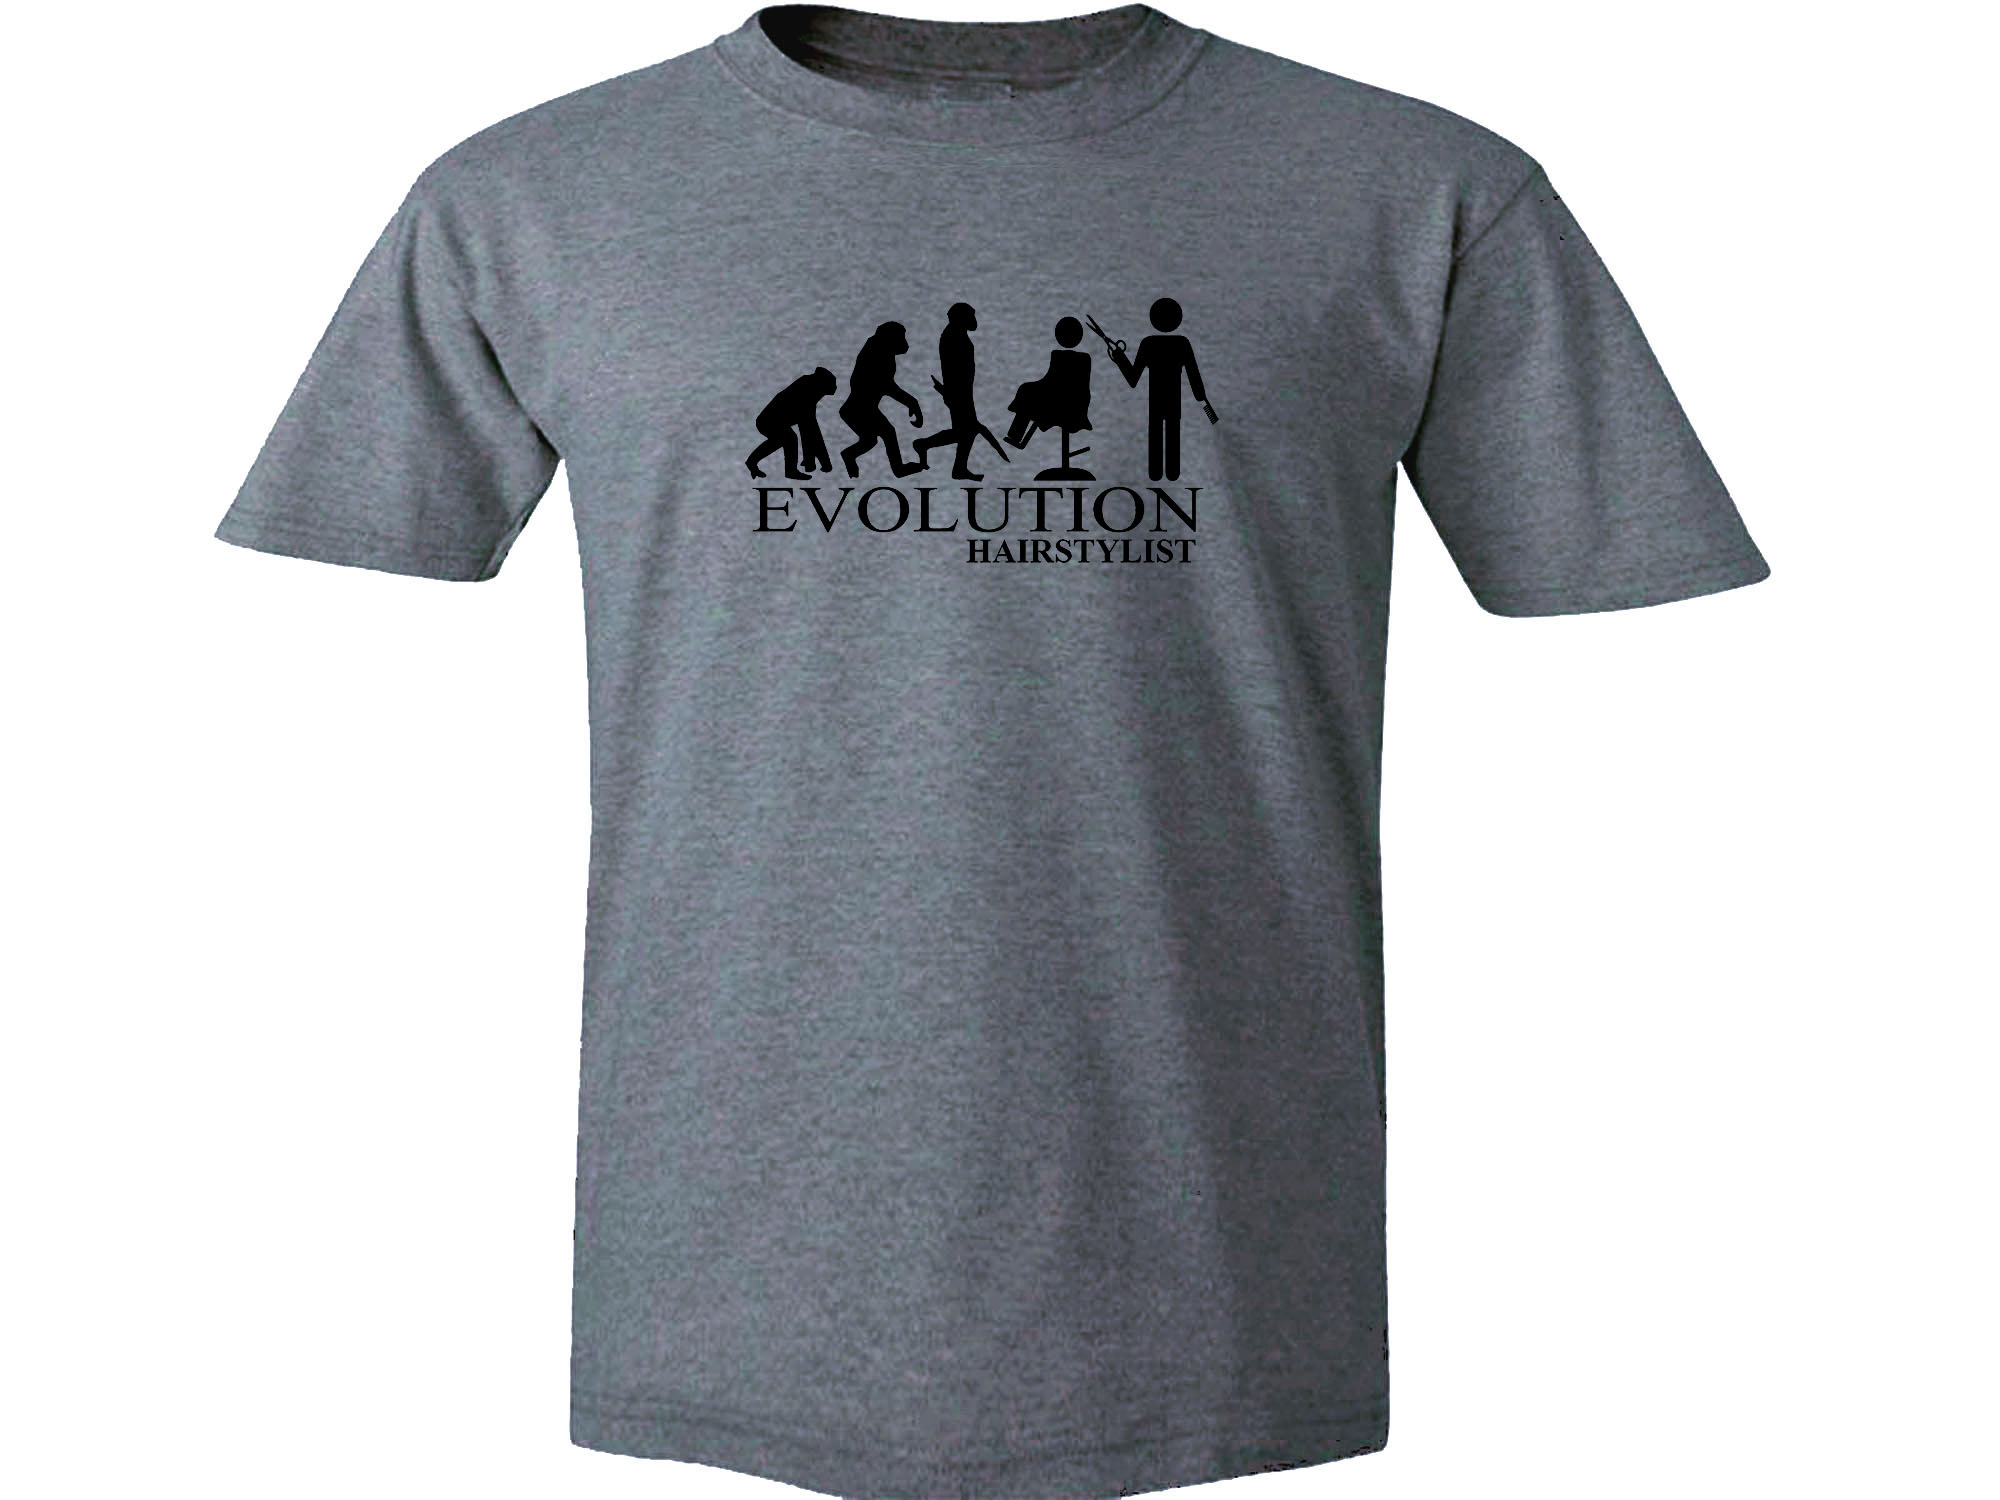 Hairstylist evolution gray graphic t shirt 1